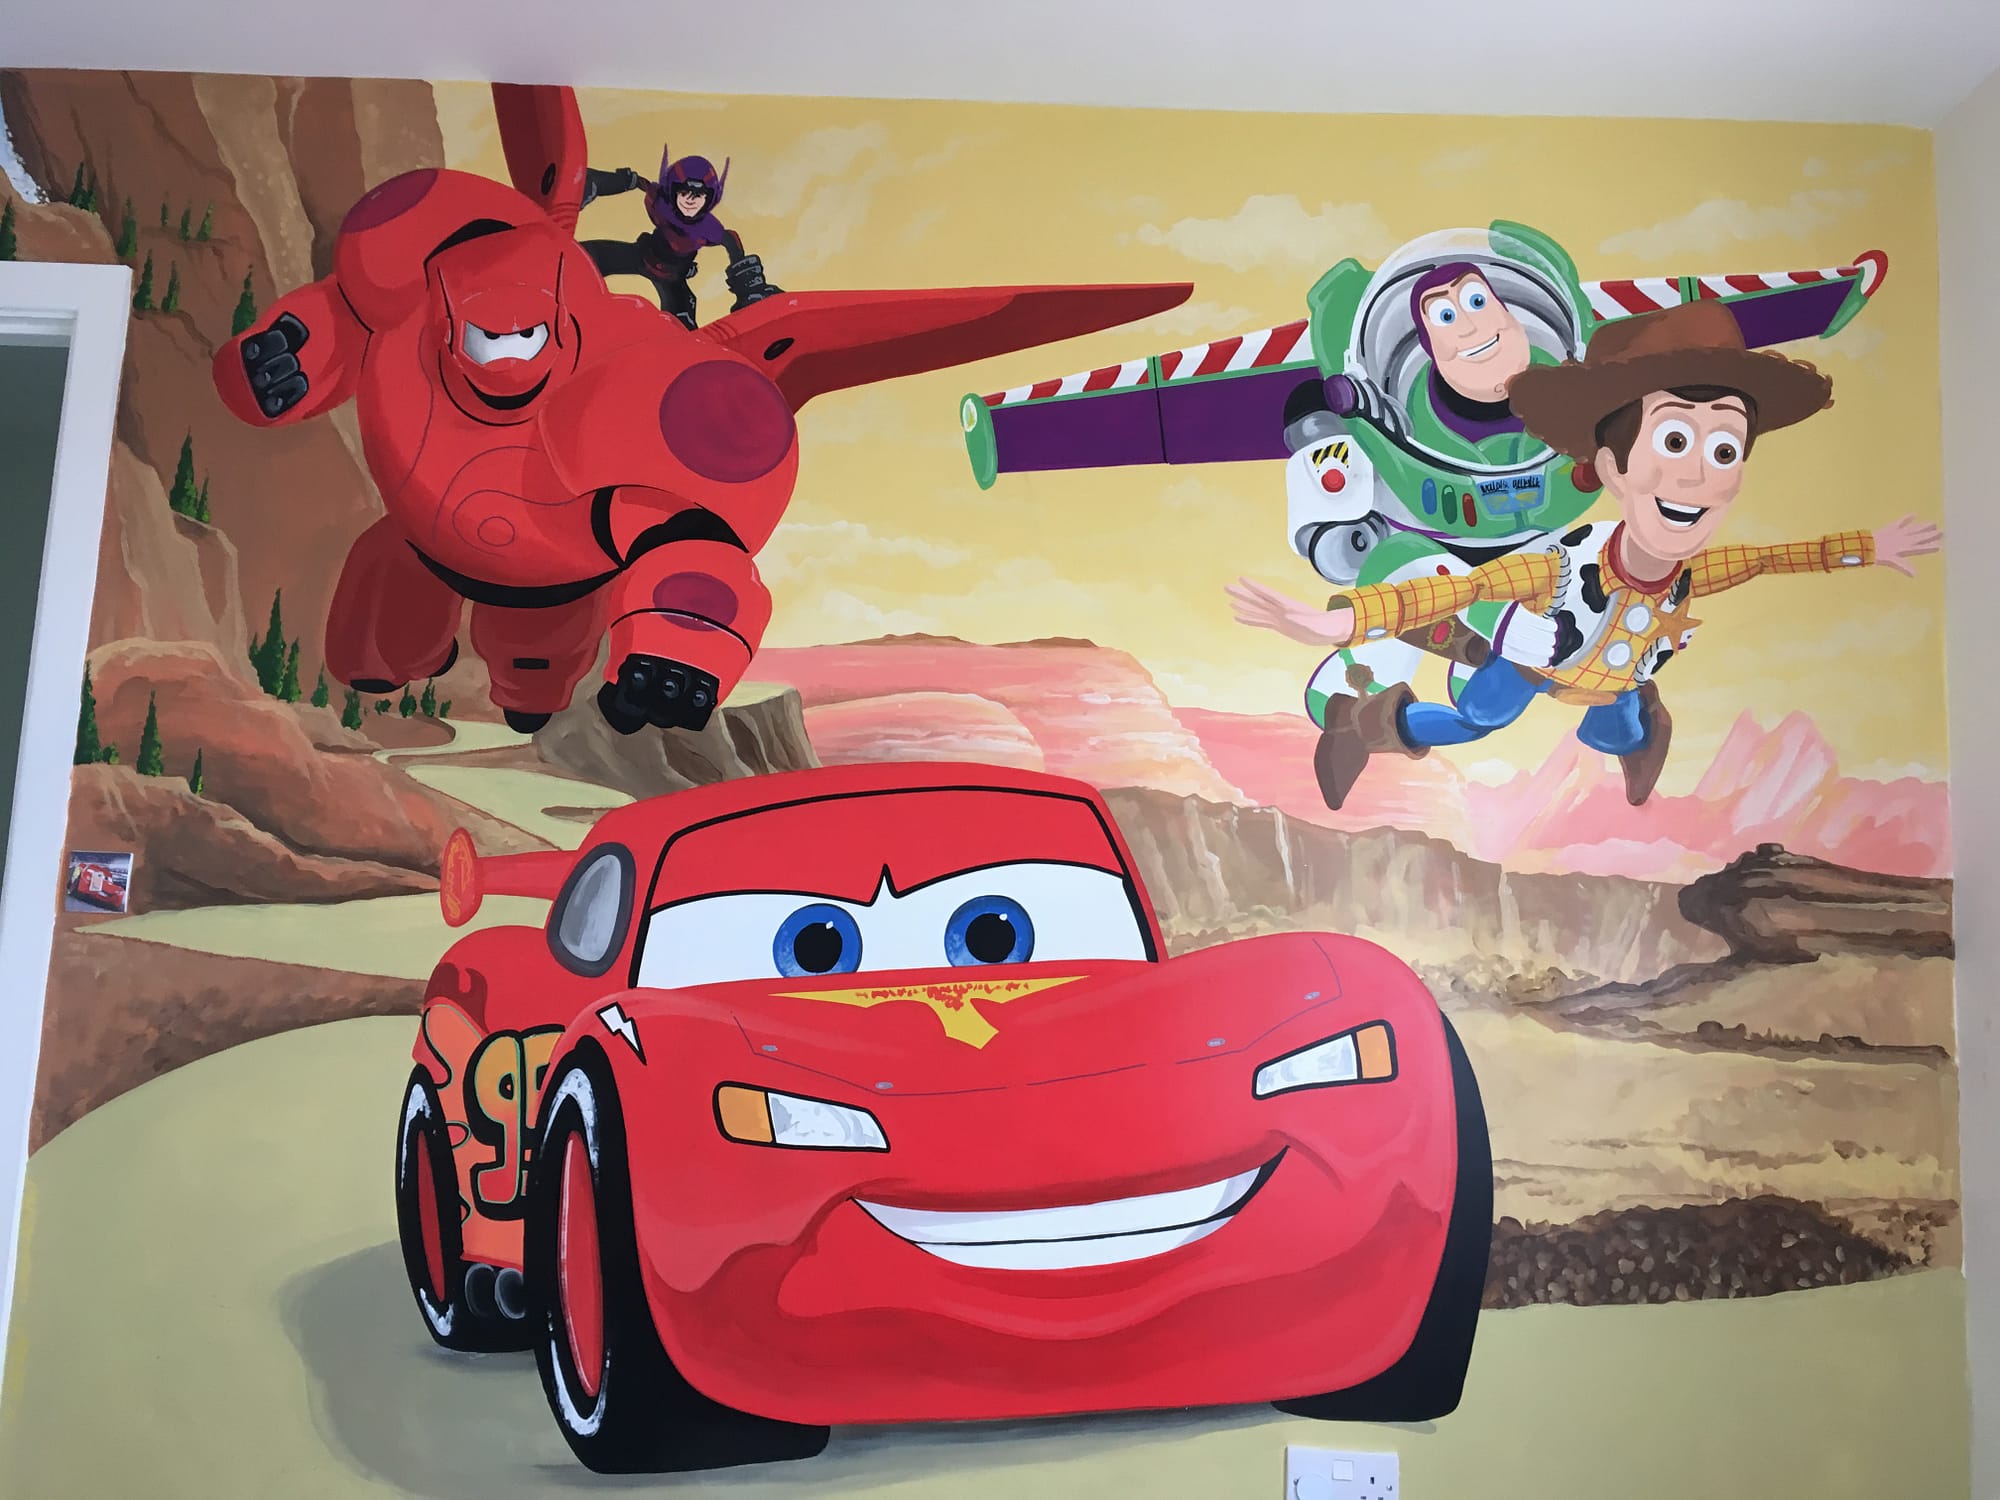 Big Hero 6, Buzz Lightyear, Woody, Toy story, Lightning Mcqueen, Cars, Pixar, disney wall murals